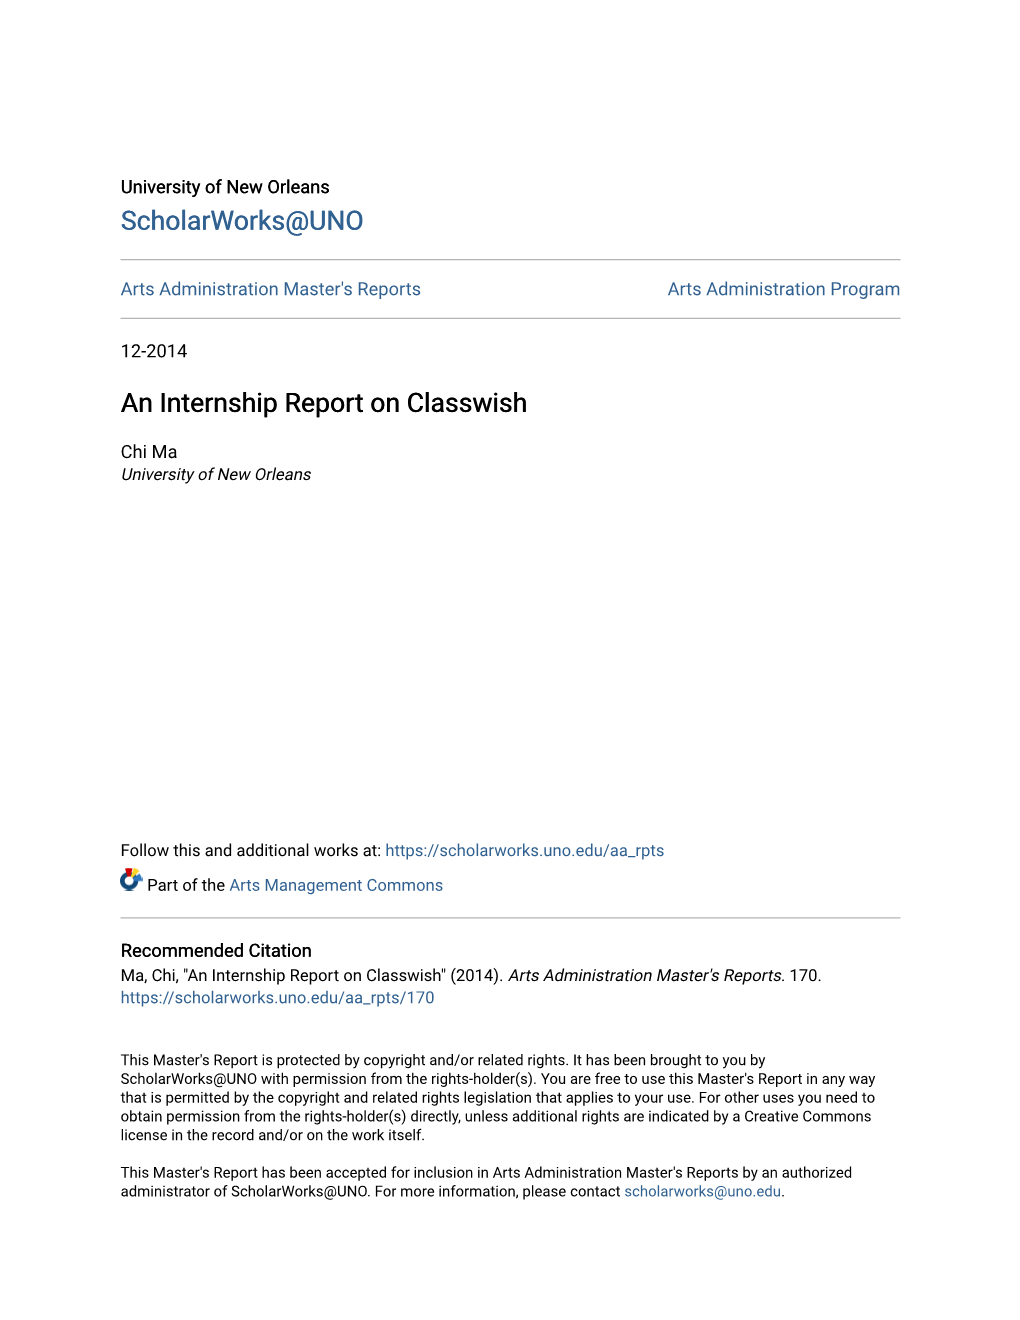 An Internship Report on Classwish